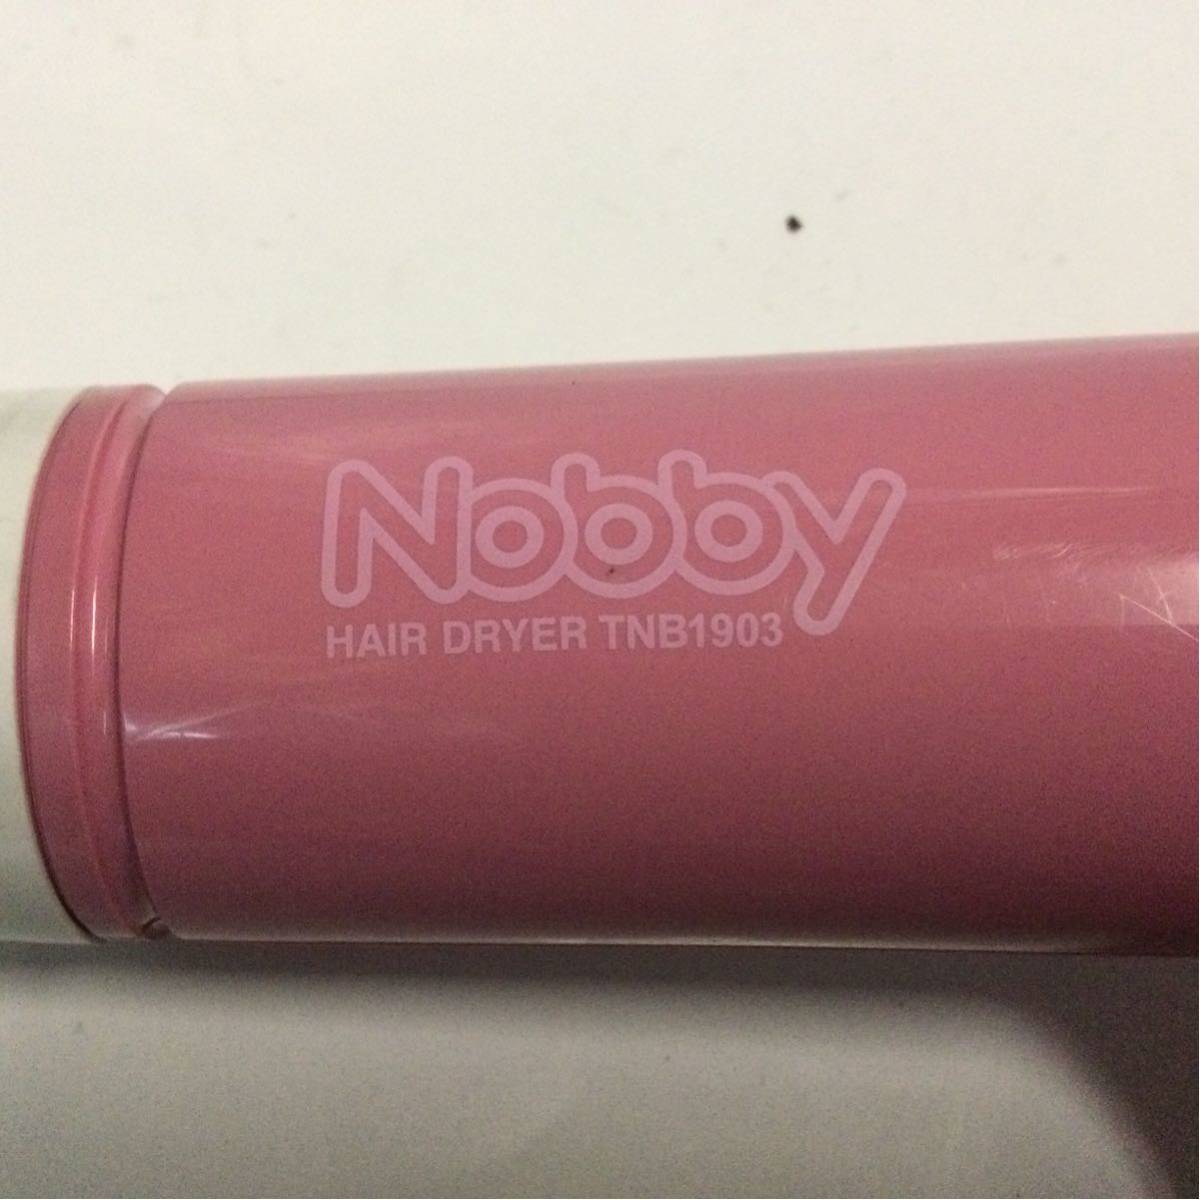 TESCOM hair dryer Nobby TNB1903 pink operation goods Tescom nobi.